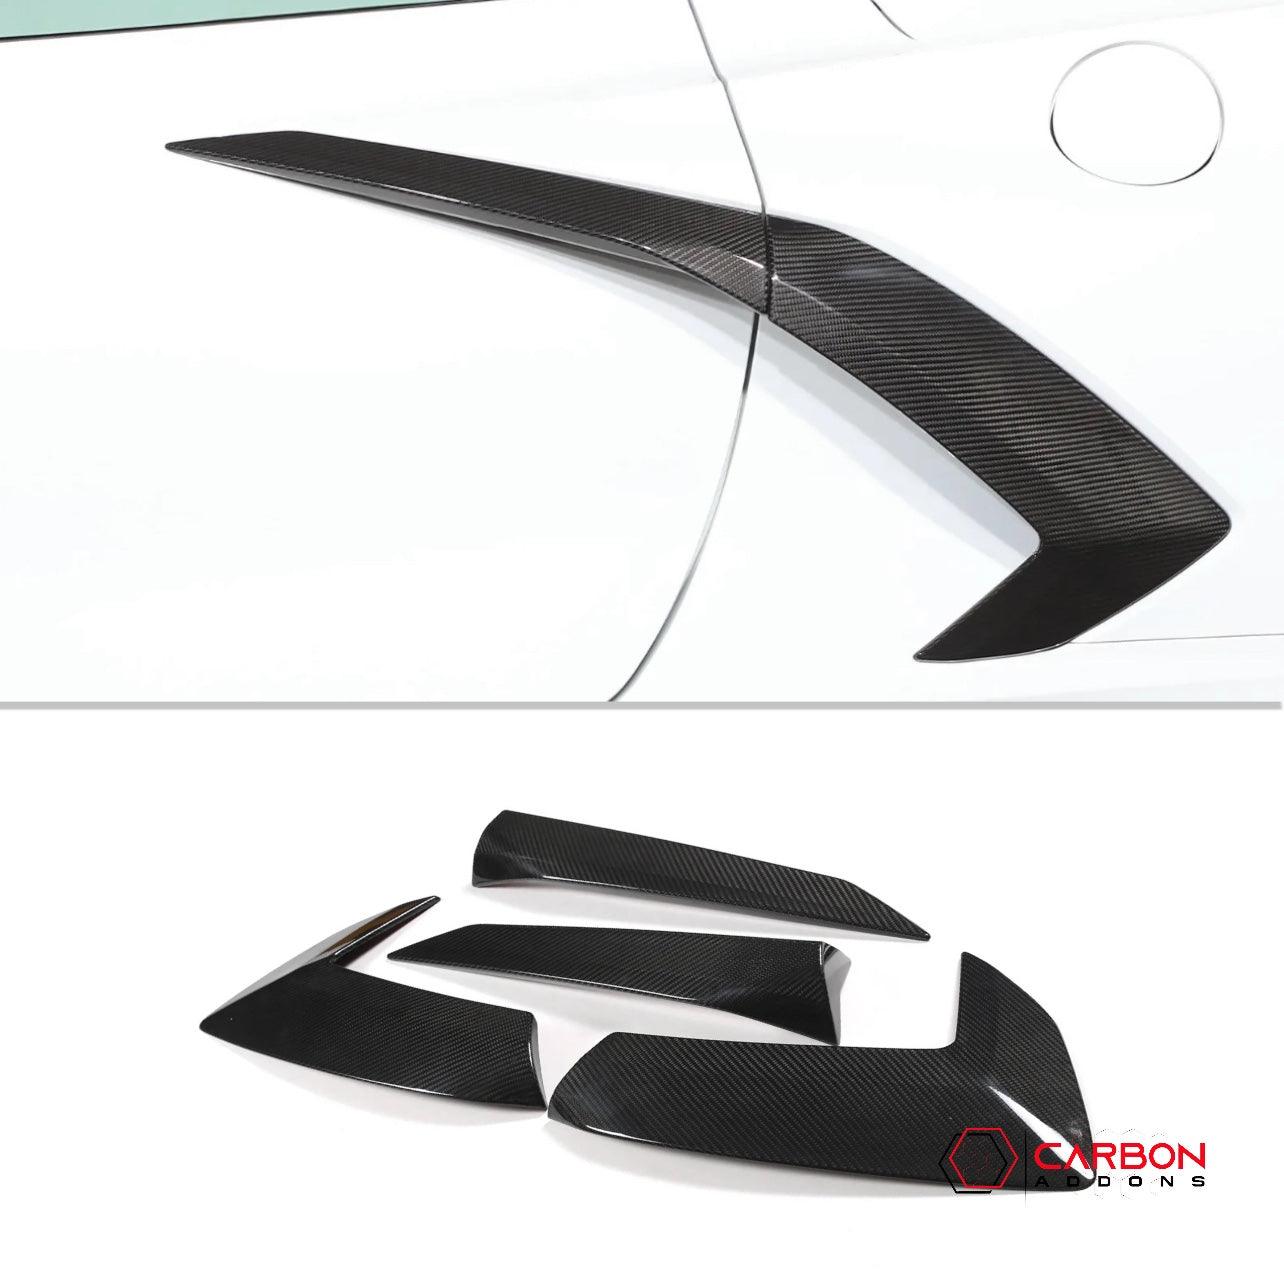 C8 Corvette Exterior Side Scoop Boomerang Trim Carbon Fiber Cover Set - carbonaddons Carbon Fiber Parts, Accessories, Upgrades, Mods